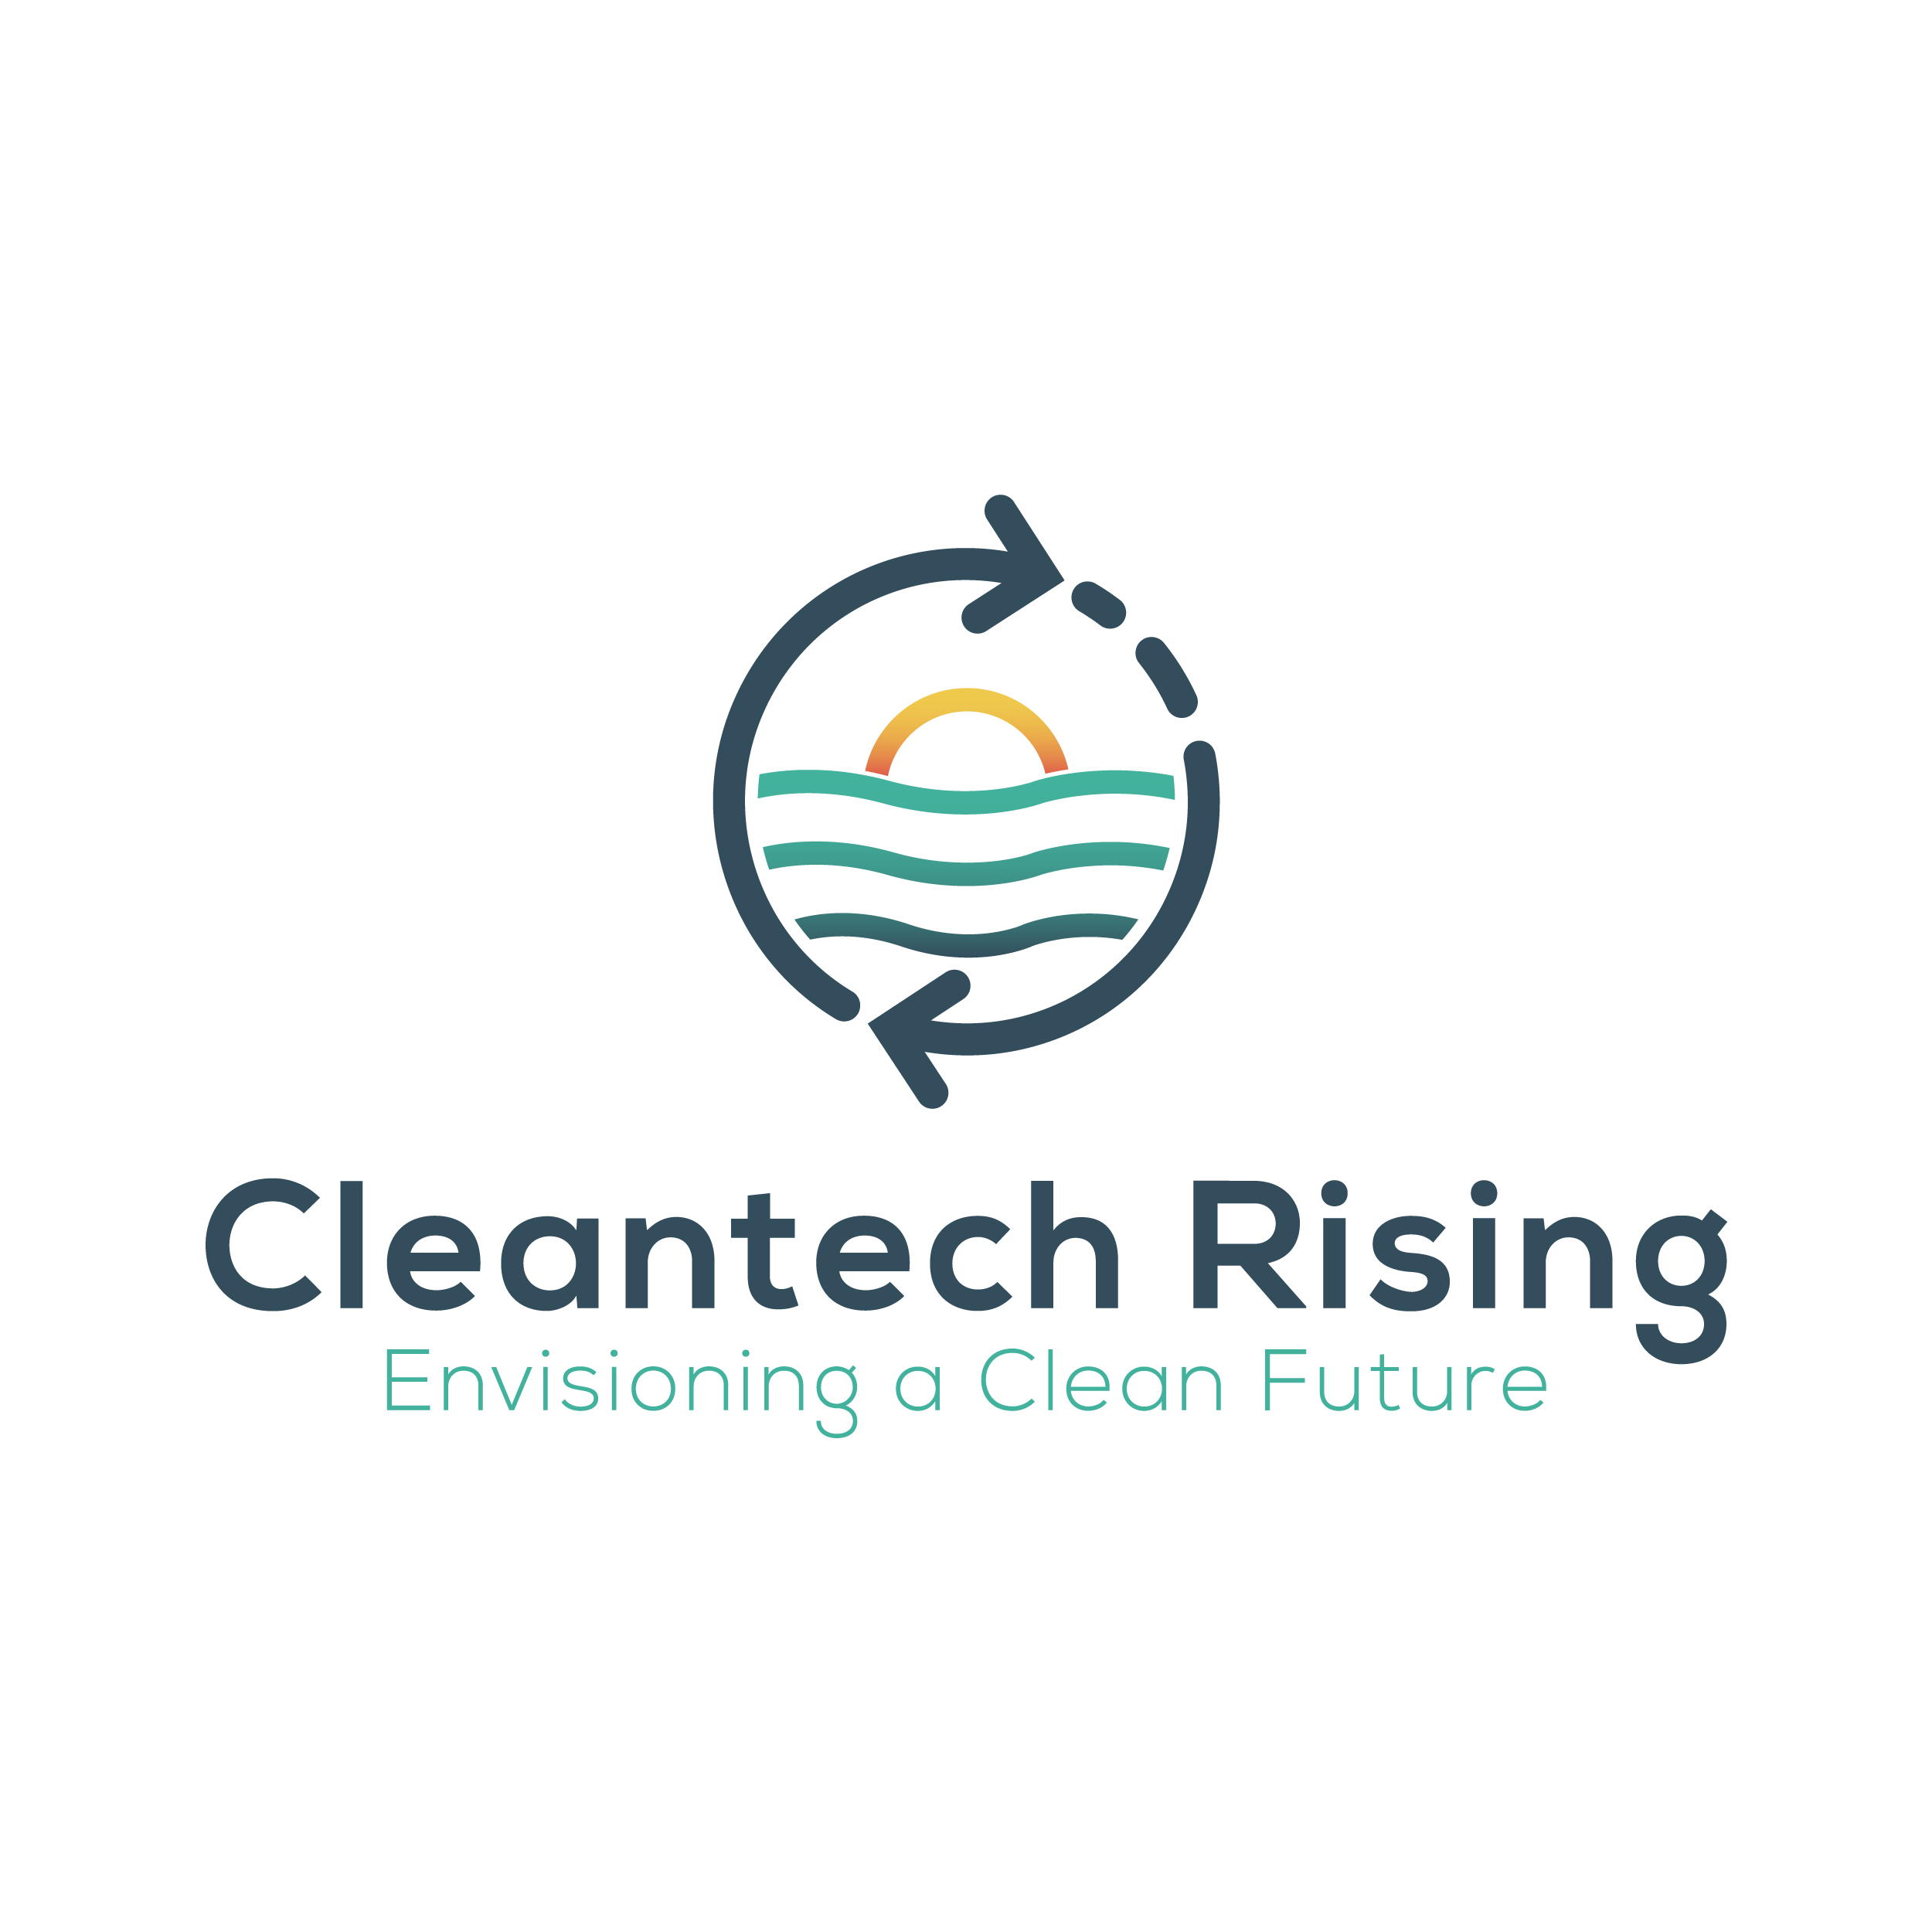 Company Cleantech Rising